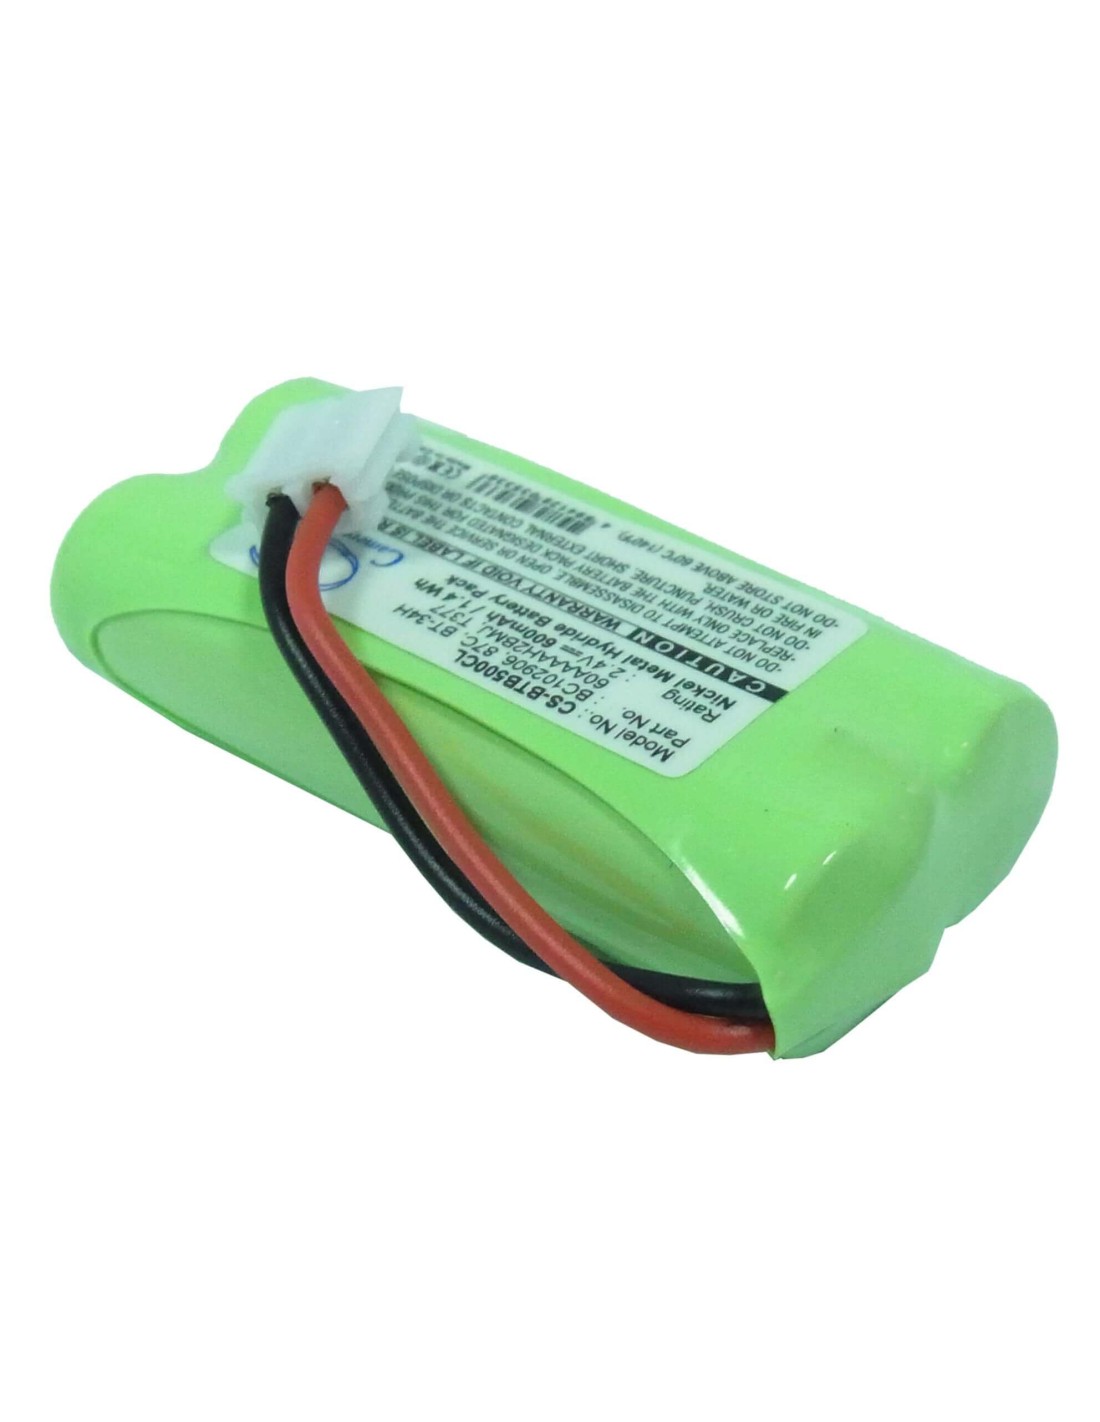 Battery for Hagenuk, Eurofon C1800 2.4V, 600mAh - 1.44Wh